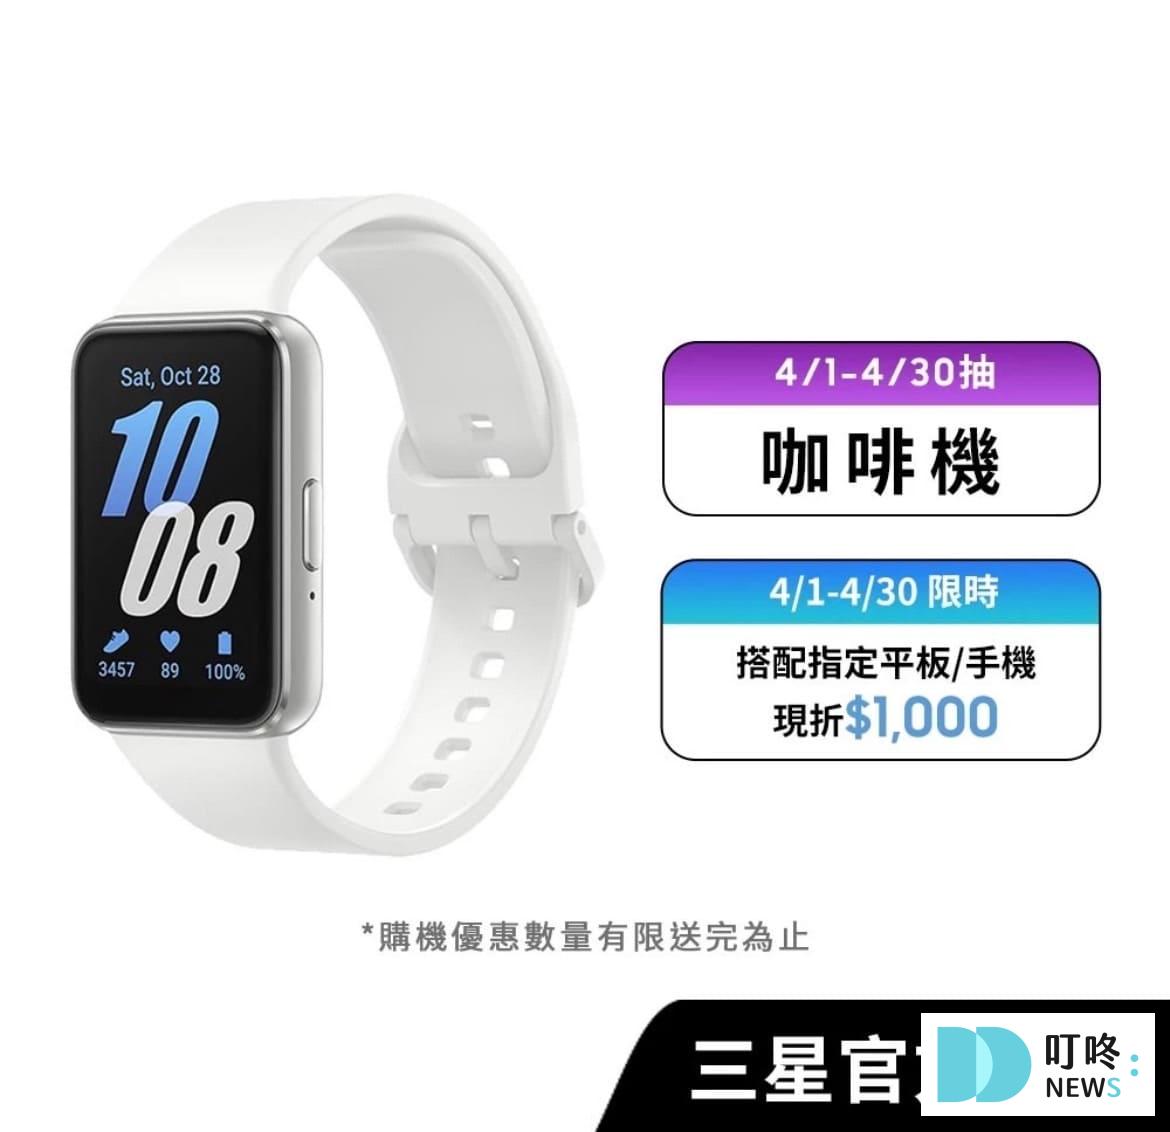 2. SAMSUNG Galaxy Fit3 健康智慧手環$2,680